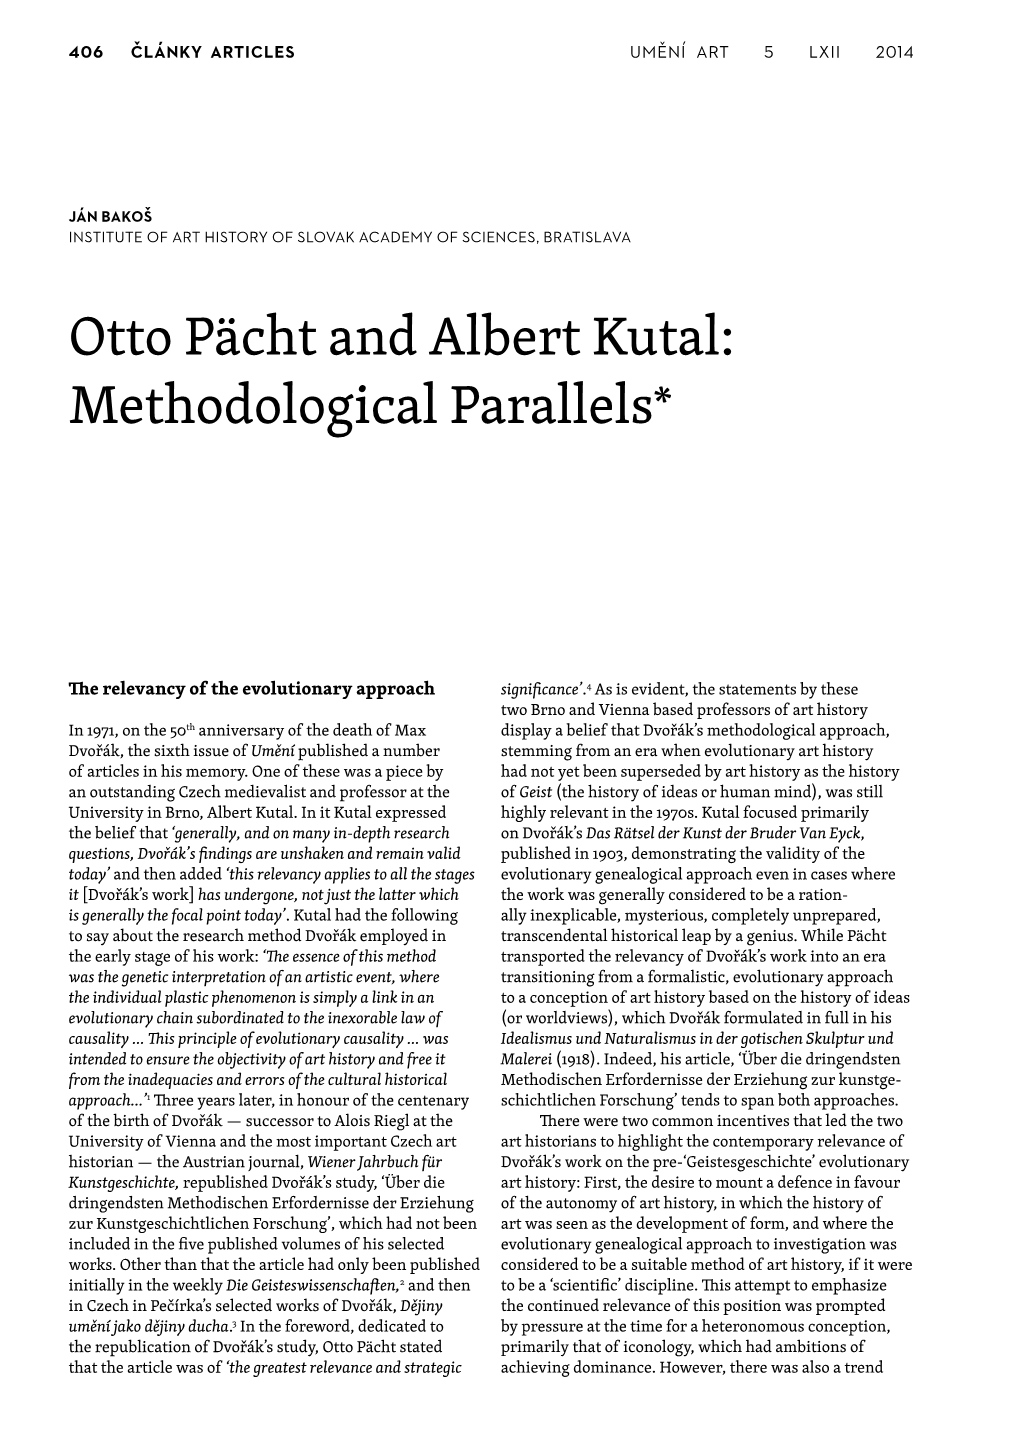 Otto Pächt and Albert Kutal: Methodological Parallels*